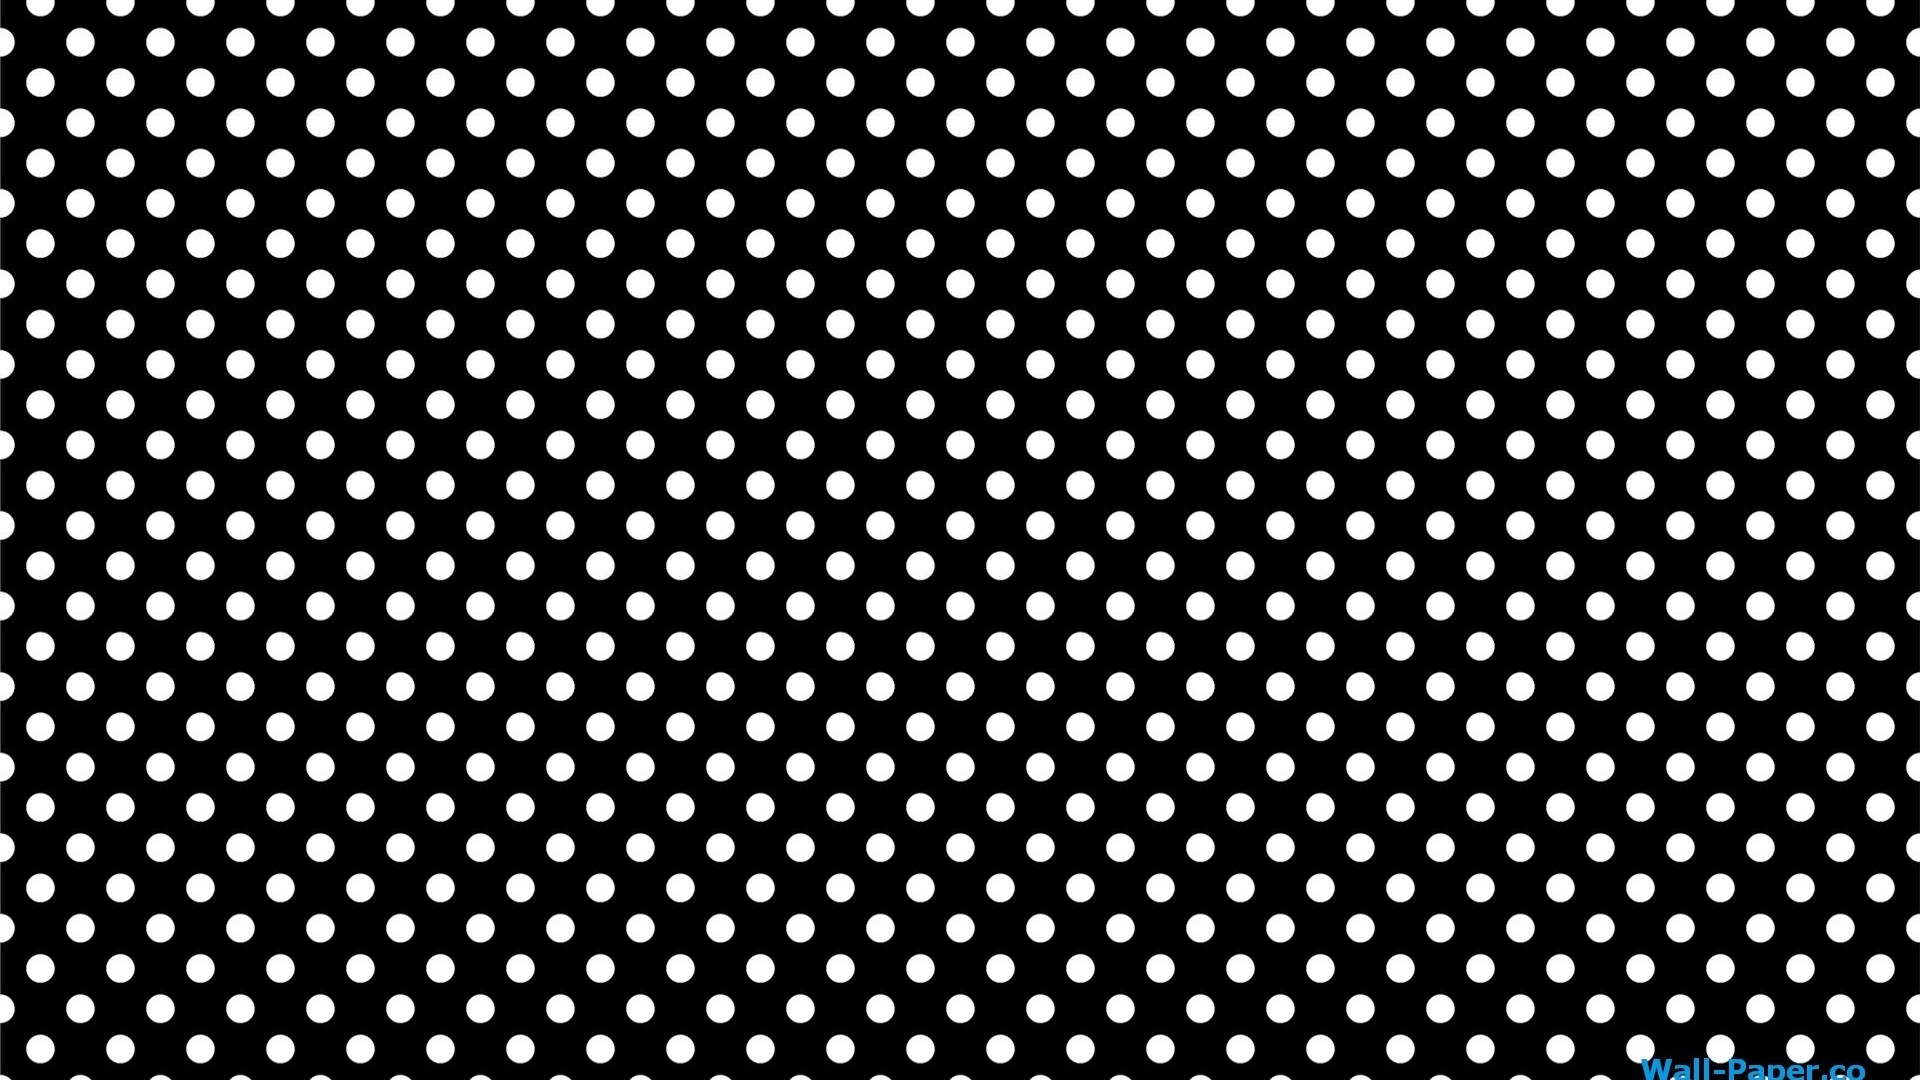 5. Black and white polka dot design on black nail polish - wide 2